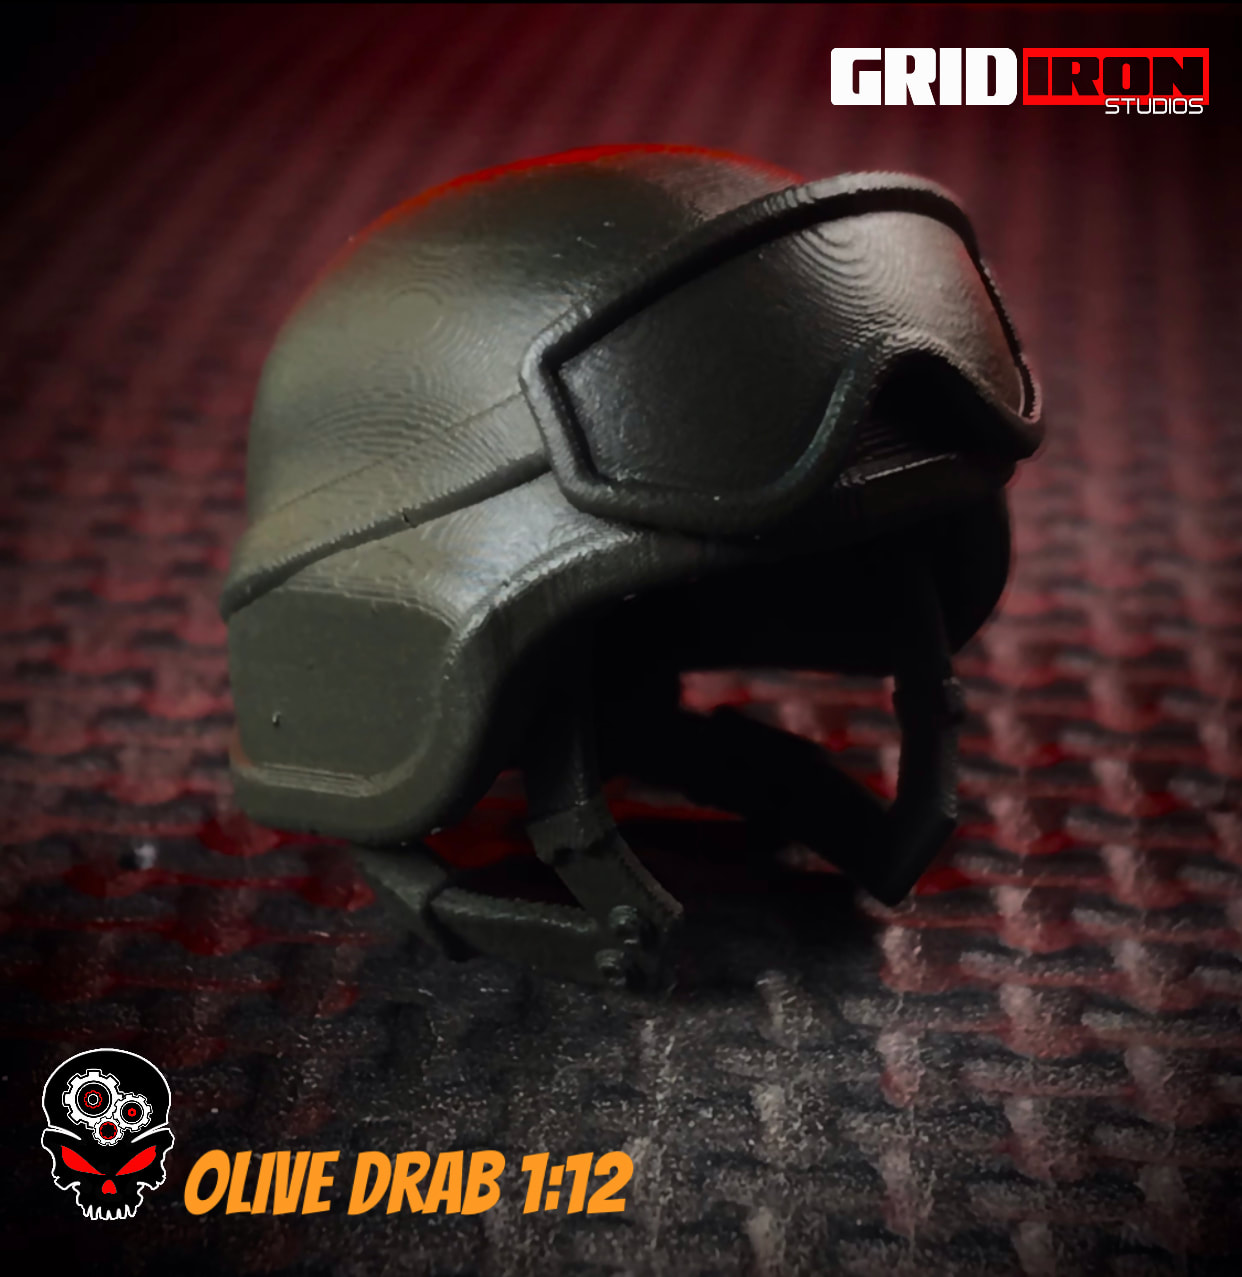 Details about   GI JOE CLASSIFIED Custom 1:12 Scale Modern Military Helmet Gear Accessory Fodder 